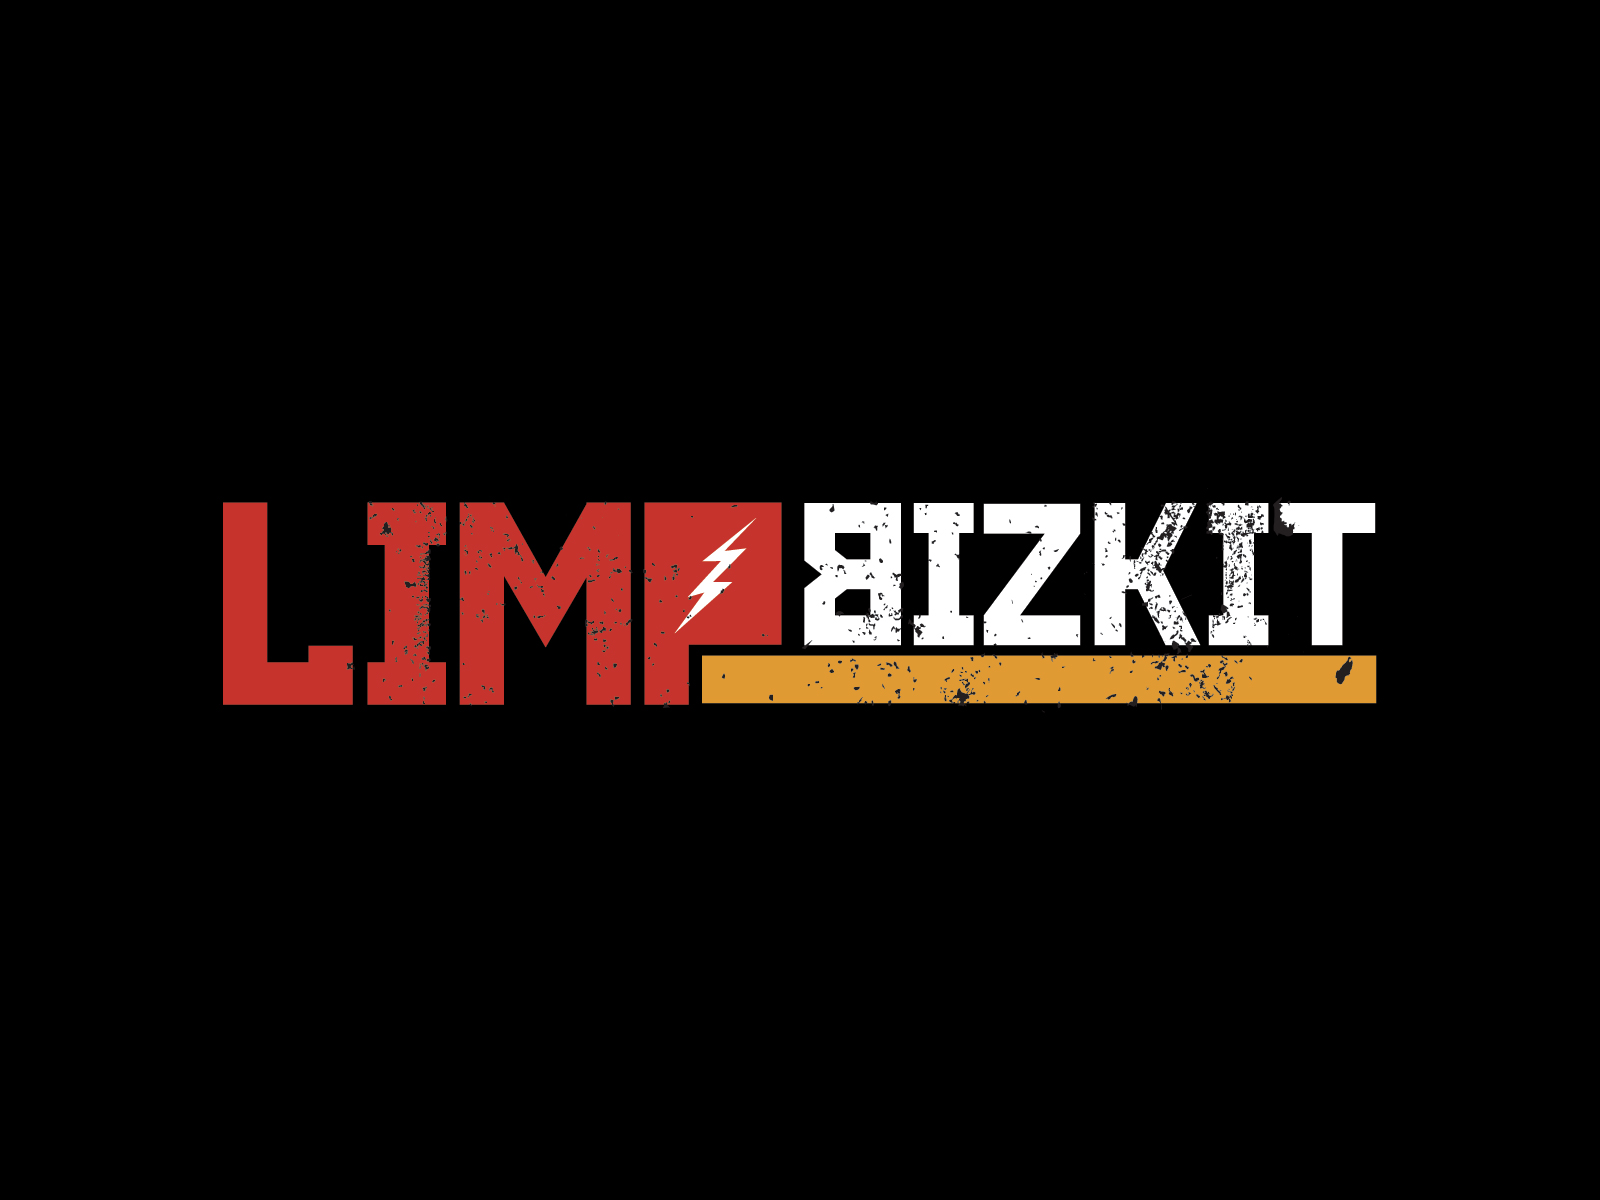 Limp Bizkit Logo And Wallpaper Band Logos Rock